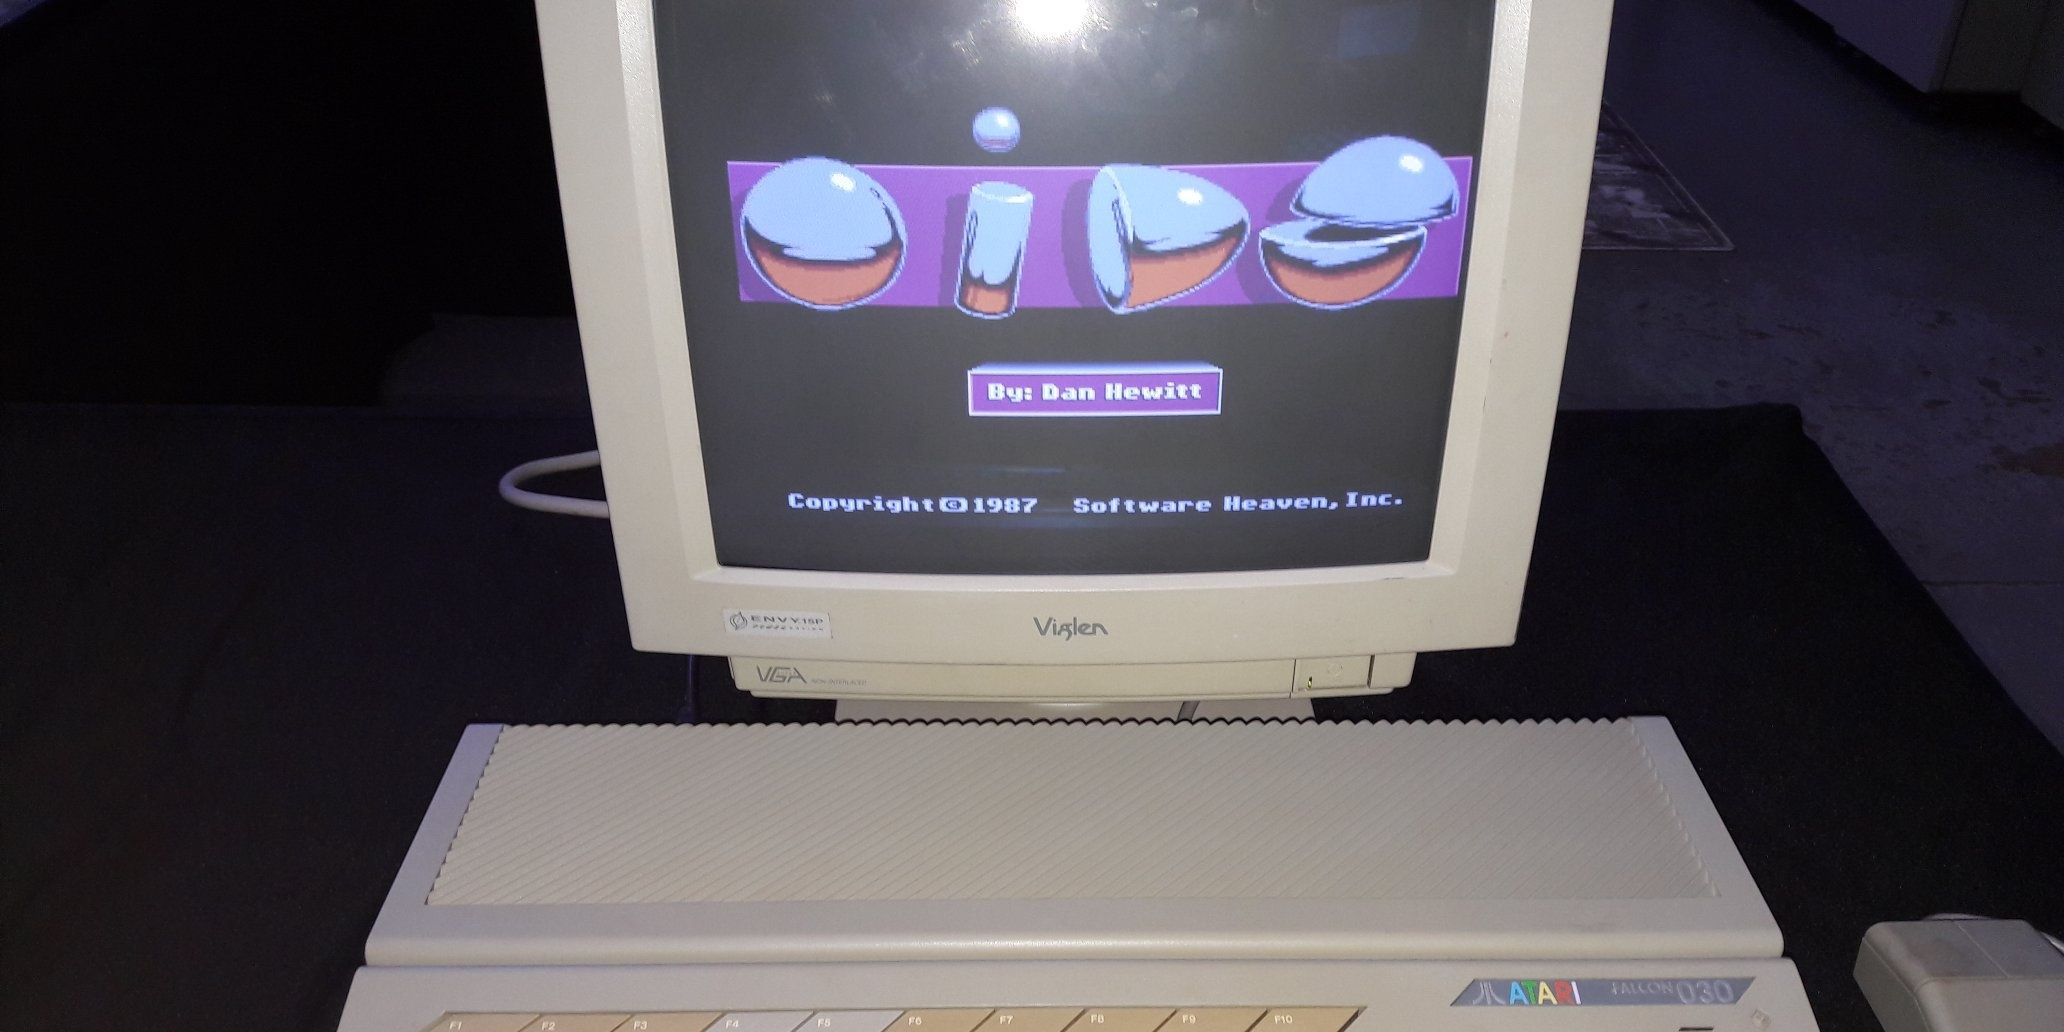 Oids loading screen on an Atari ST